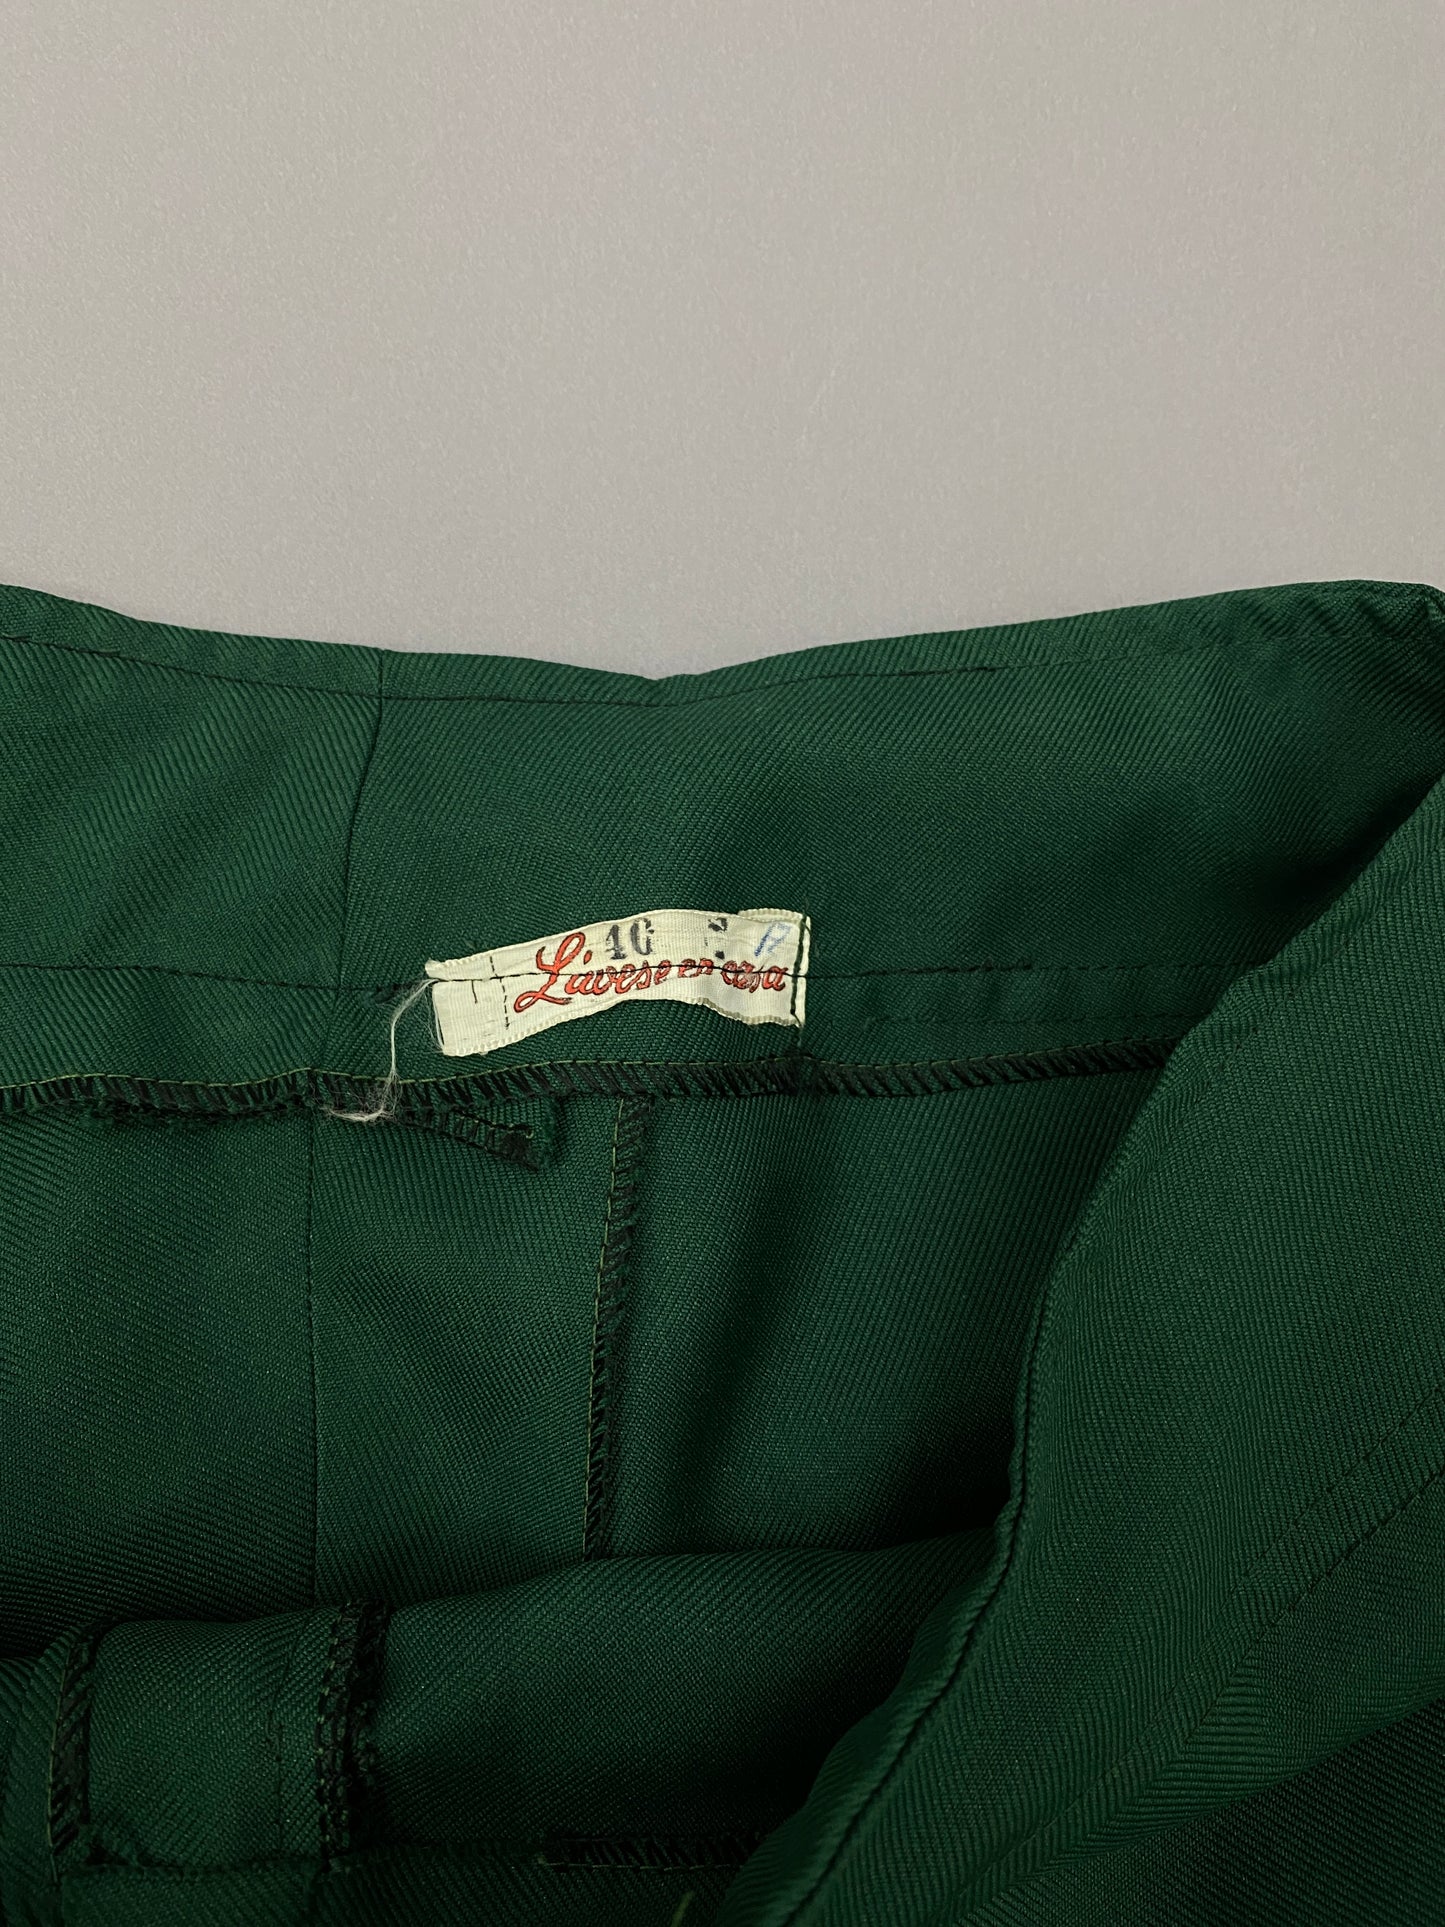 Vintage Green Pants